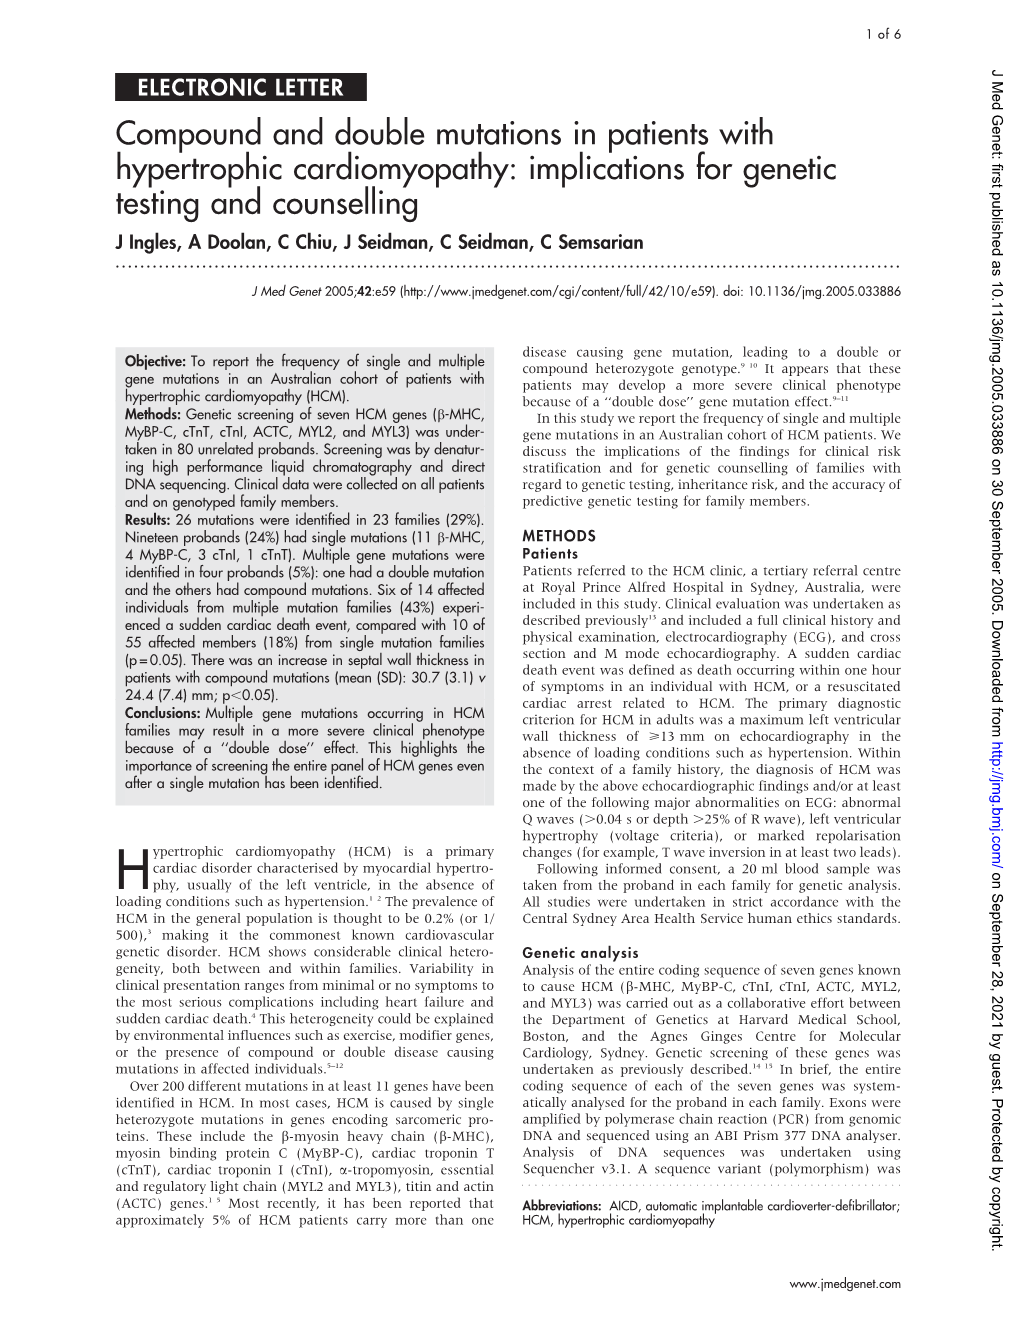 Implications for Genetic Testing and Counselling J Ingles, a Doolan, C Chiu, J Seidman, C Seidman, C Semsarian